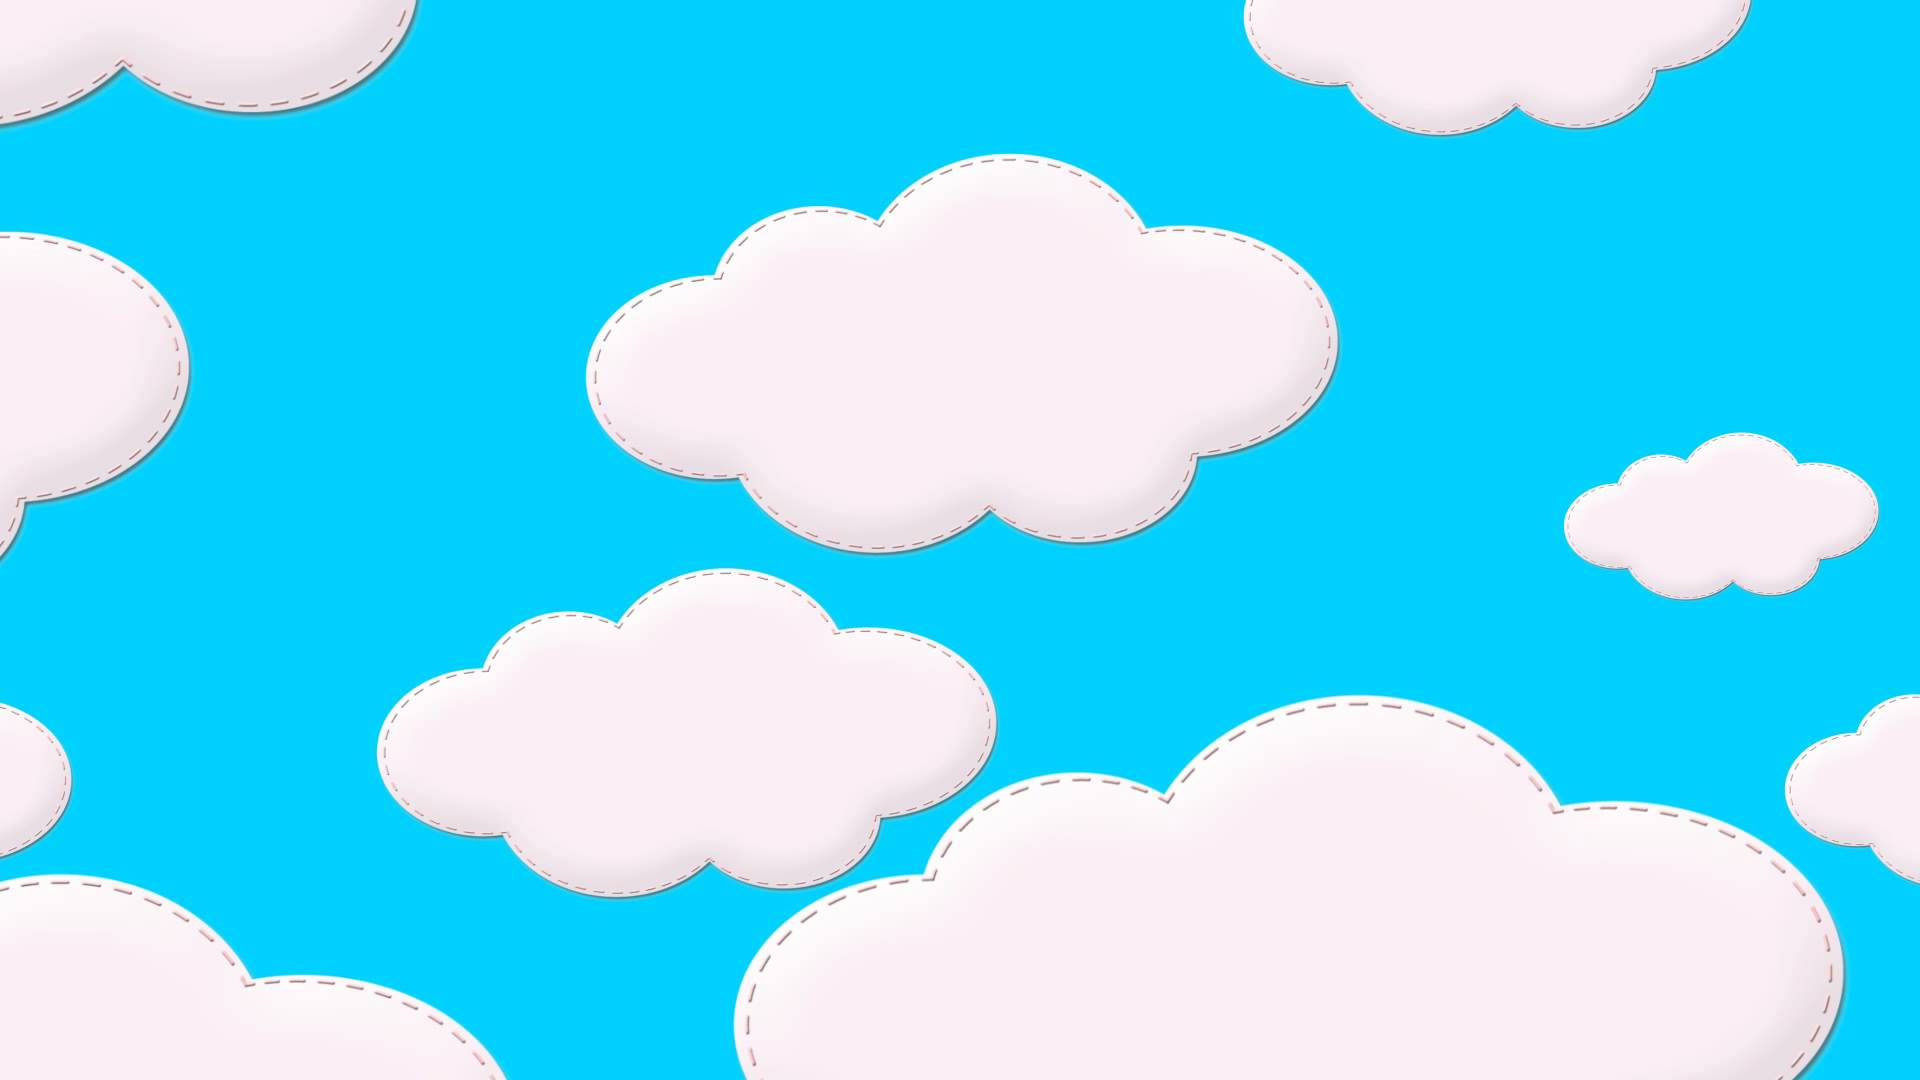 Cartoony Aesthetic Clouds Wallpaper